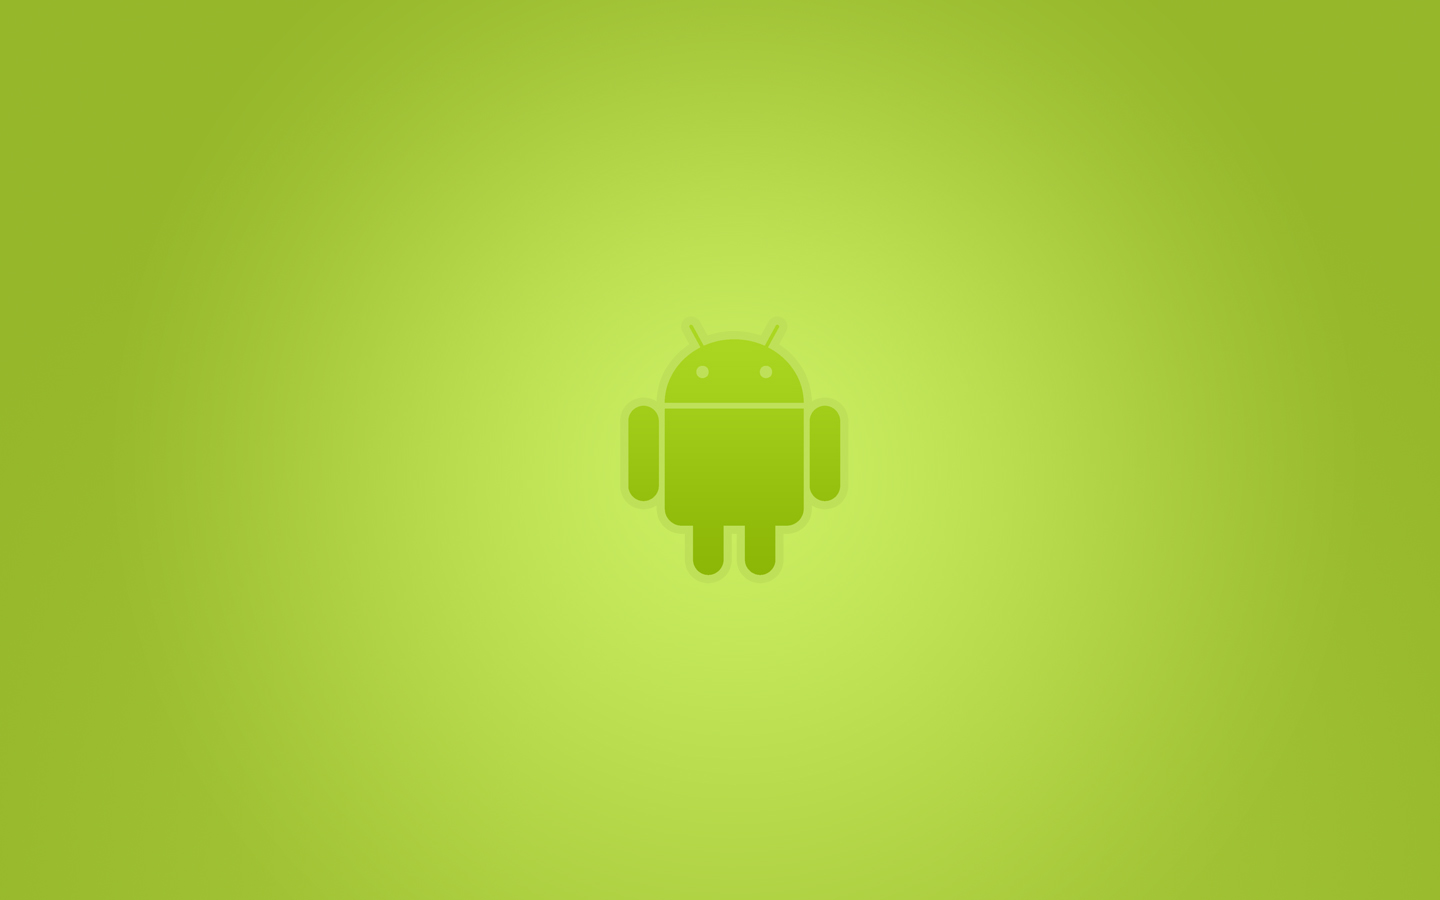 google wallpaper for android,green,yellow,logo,design,illustration